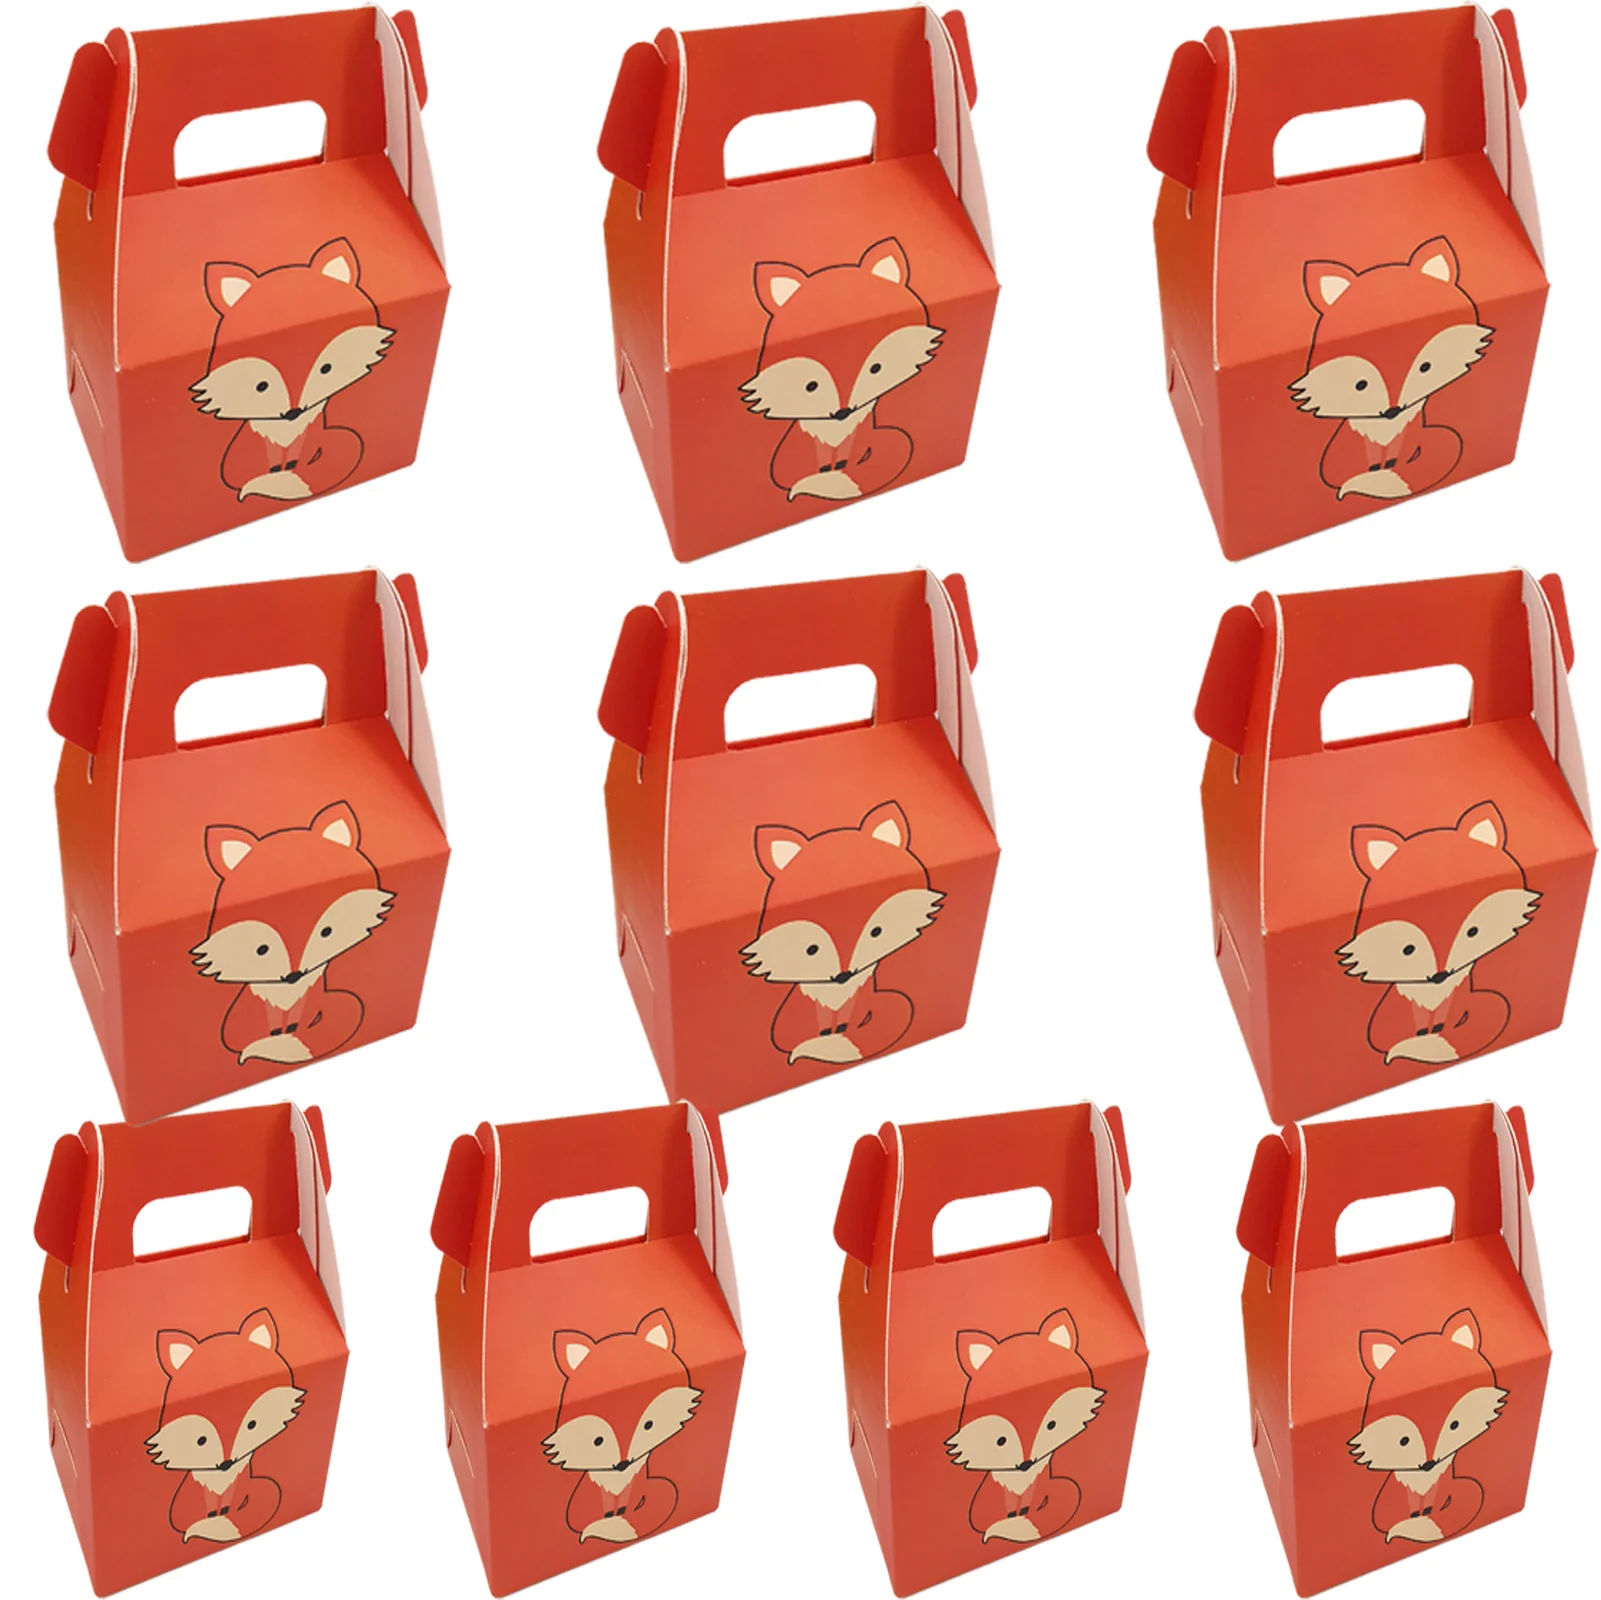 

10pcs Animal Fox Party Favor Boxes Cardboard Treat Box Portable Children Birthday Candy Gift Box Woodland Theme Decor Supplies